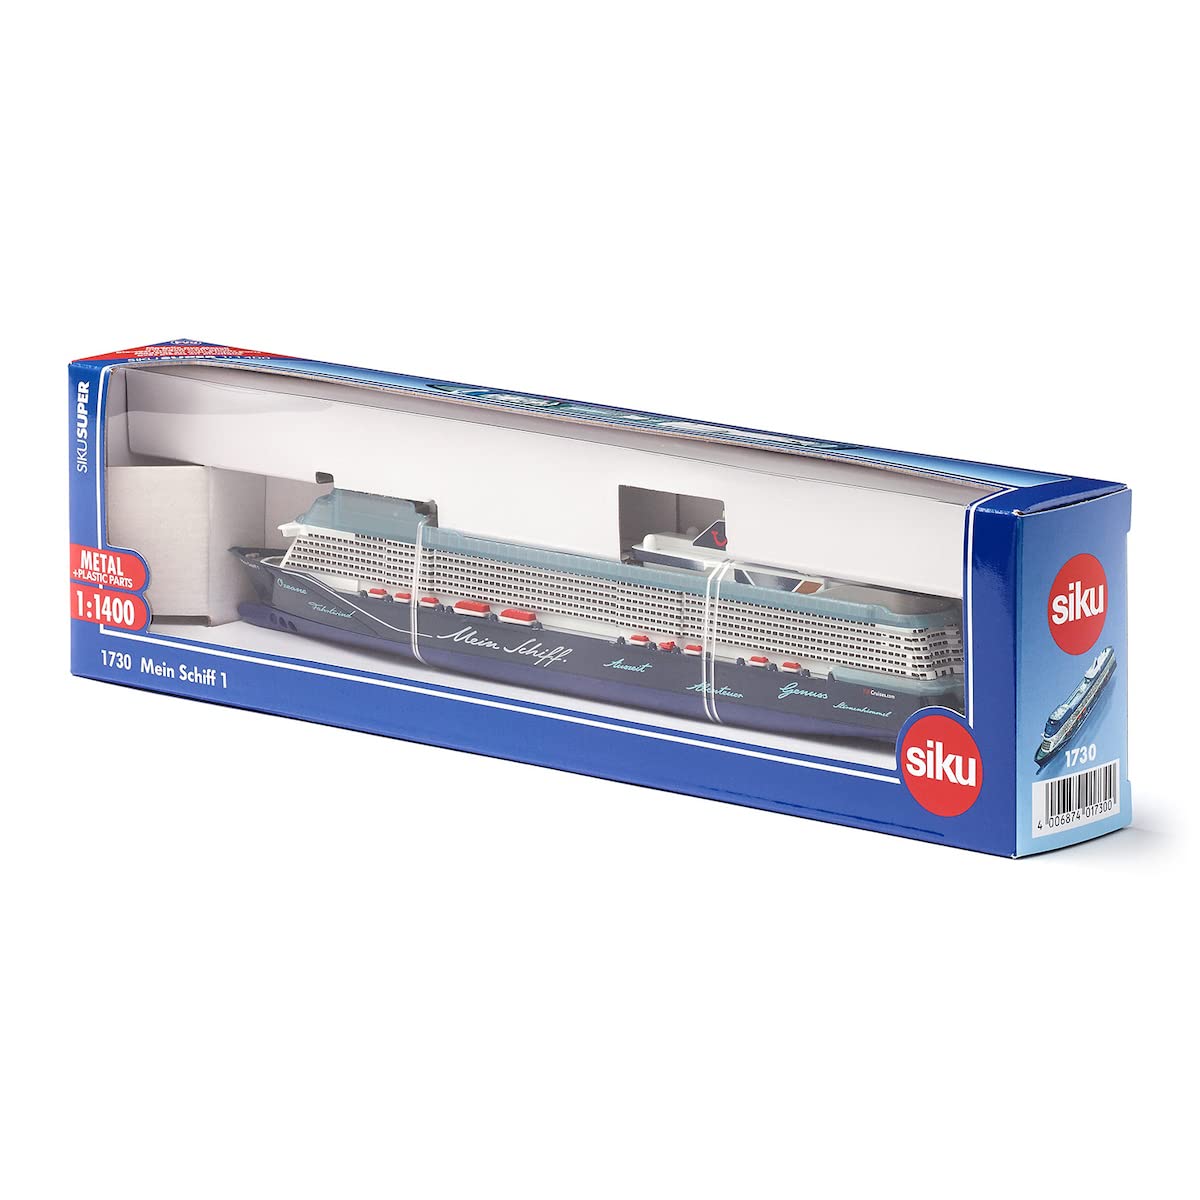 Siku 1730, Toy Cruise 1, 1:1400, Metal/Plastic, Blue/White, Not Floatable for Unisex Children